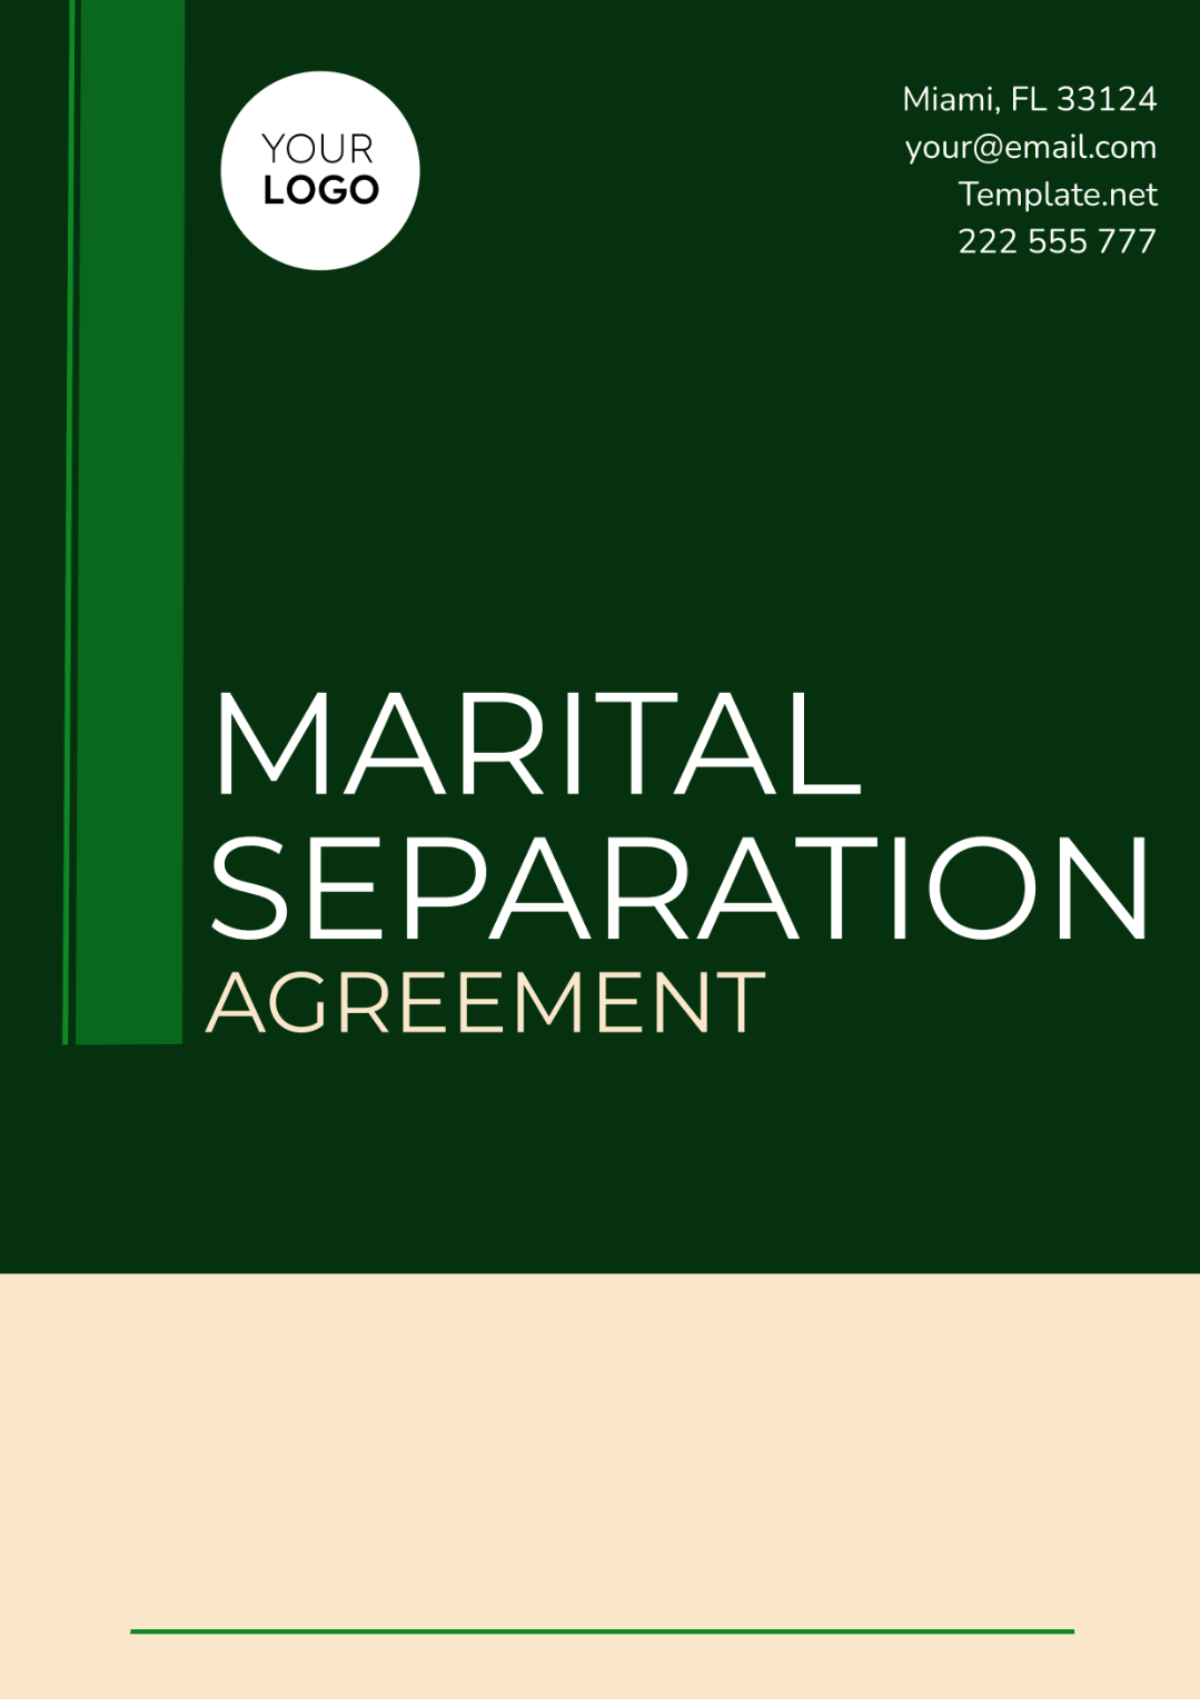 Marital Separation Agreement Template